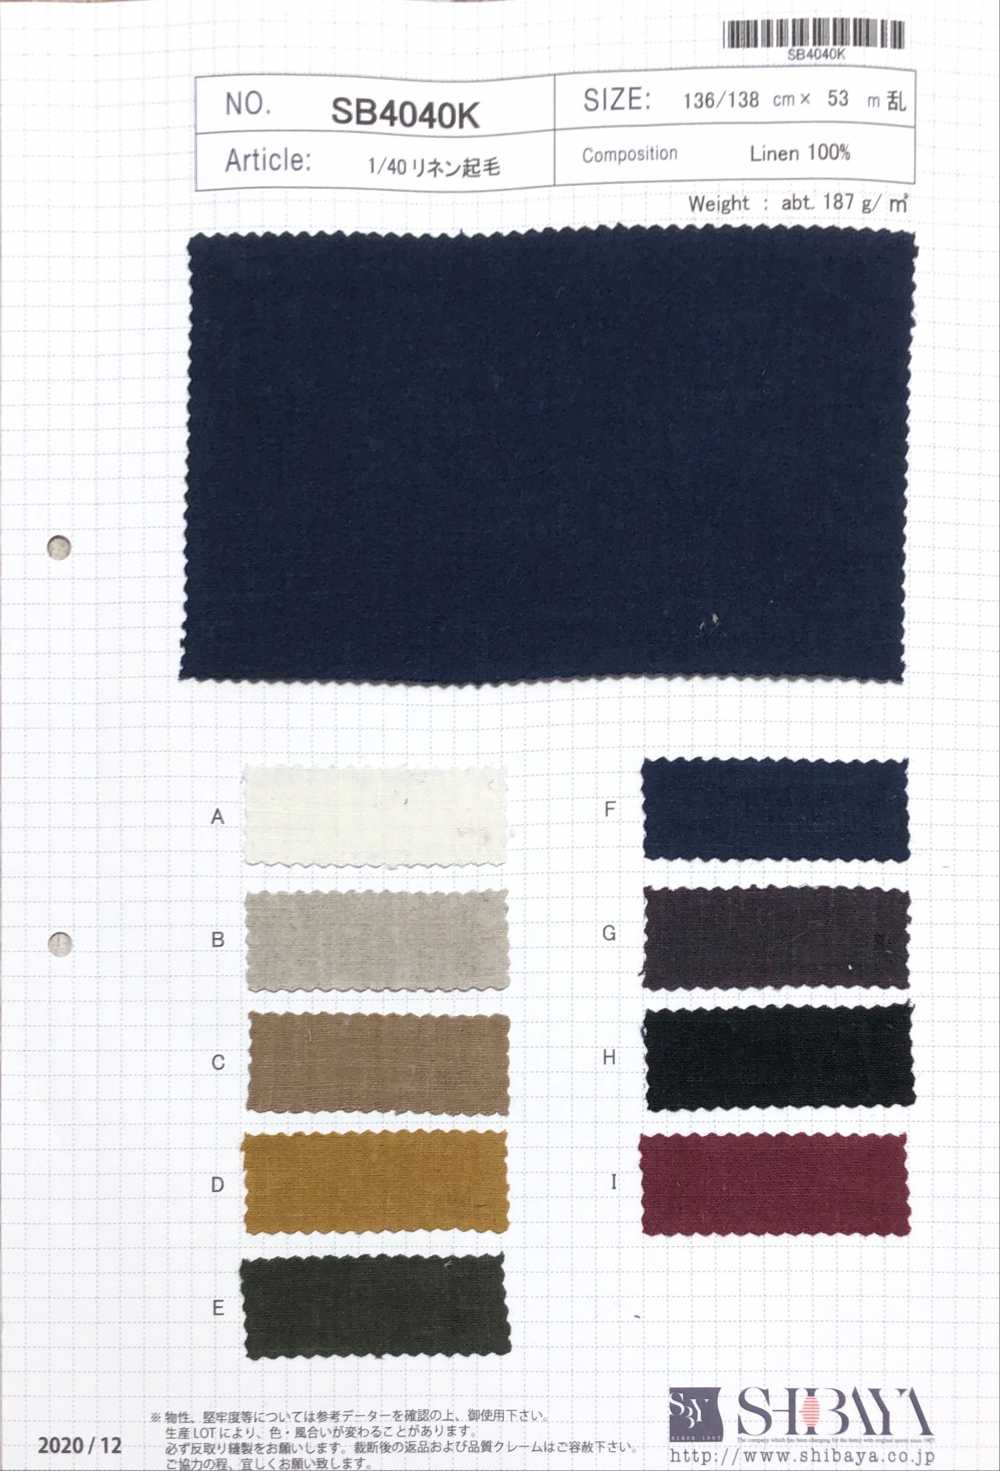 SB4040K 1/40 Fuzzy Linen[Textile / Fabric] SHIBAYA